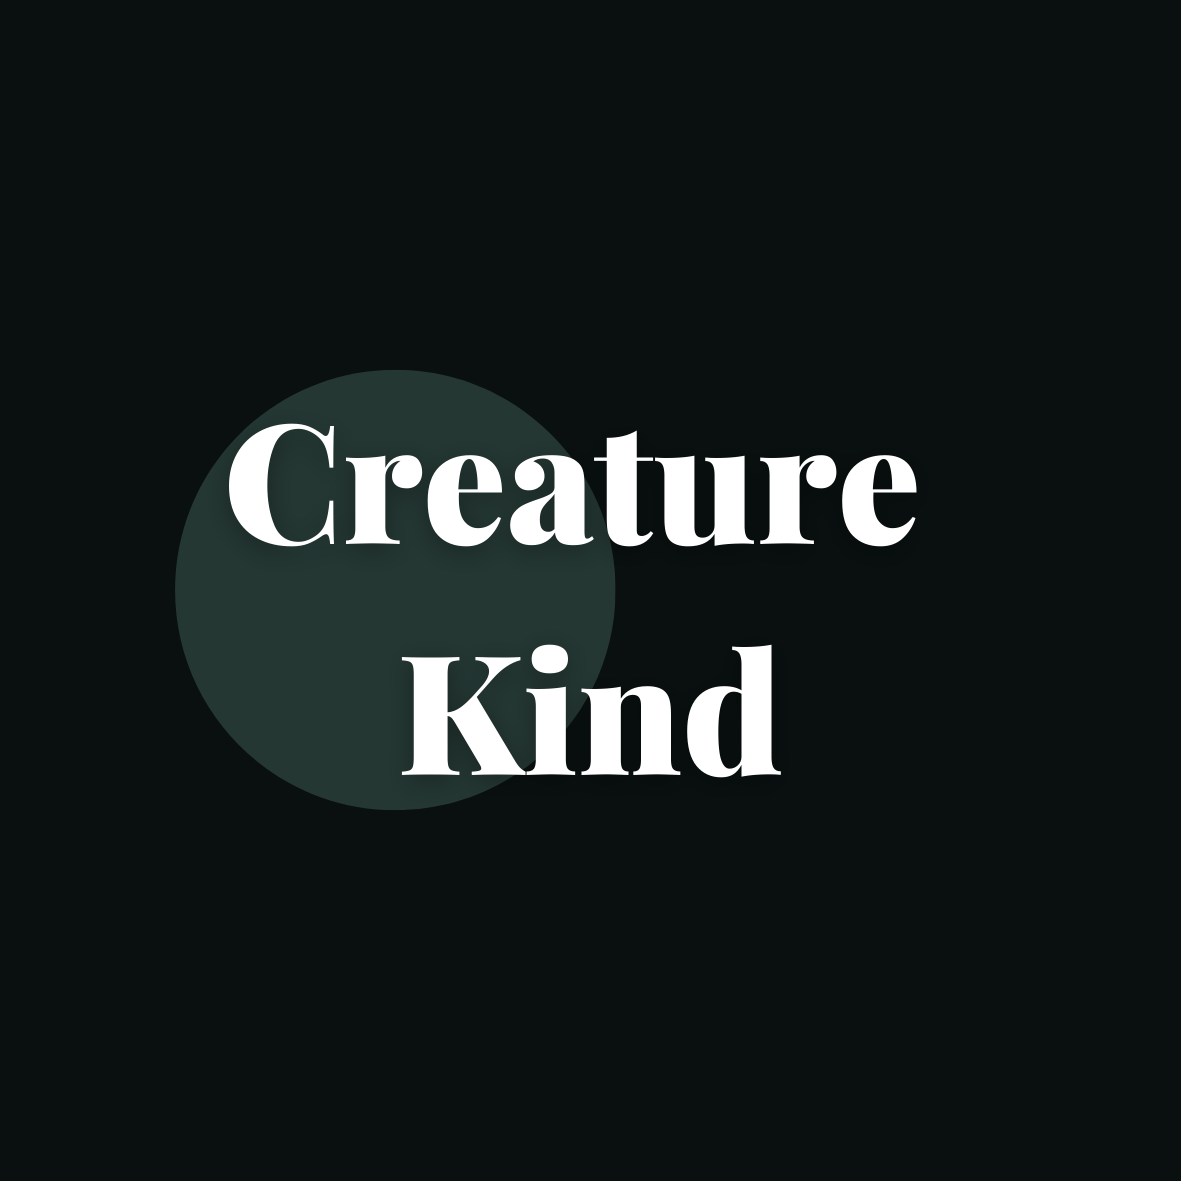 Creature Kind